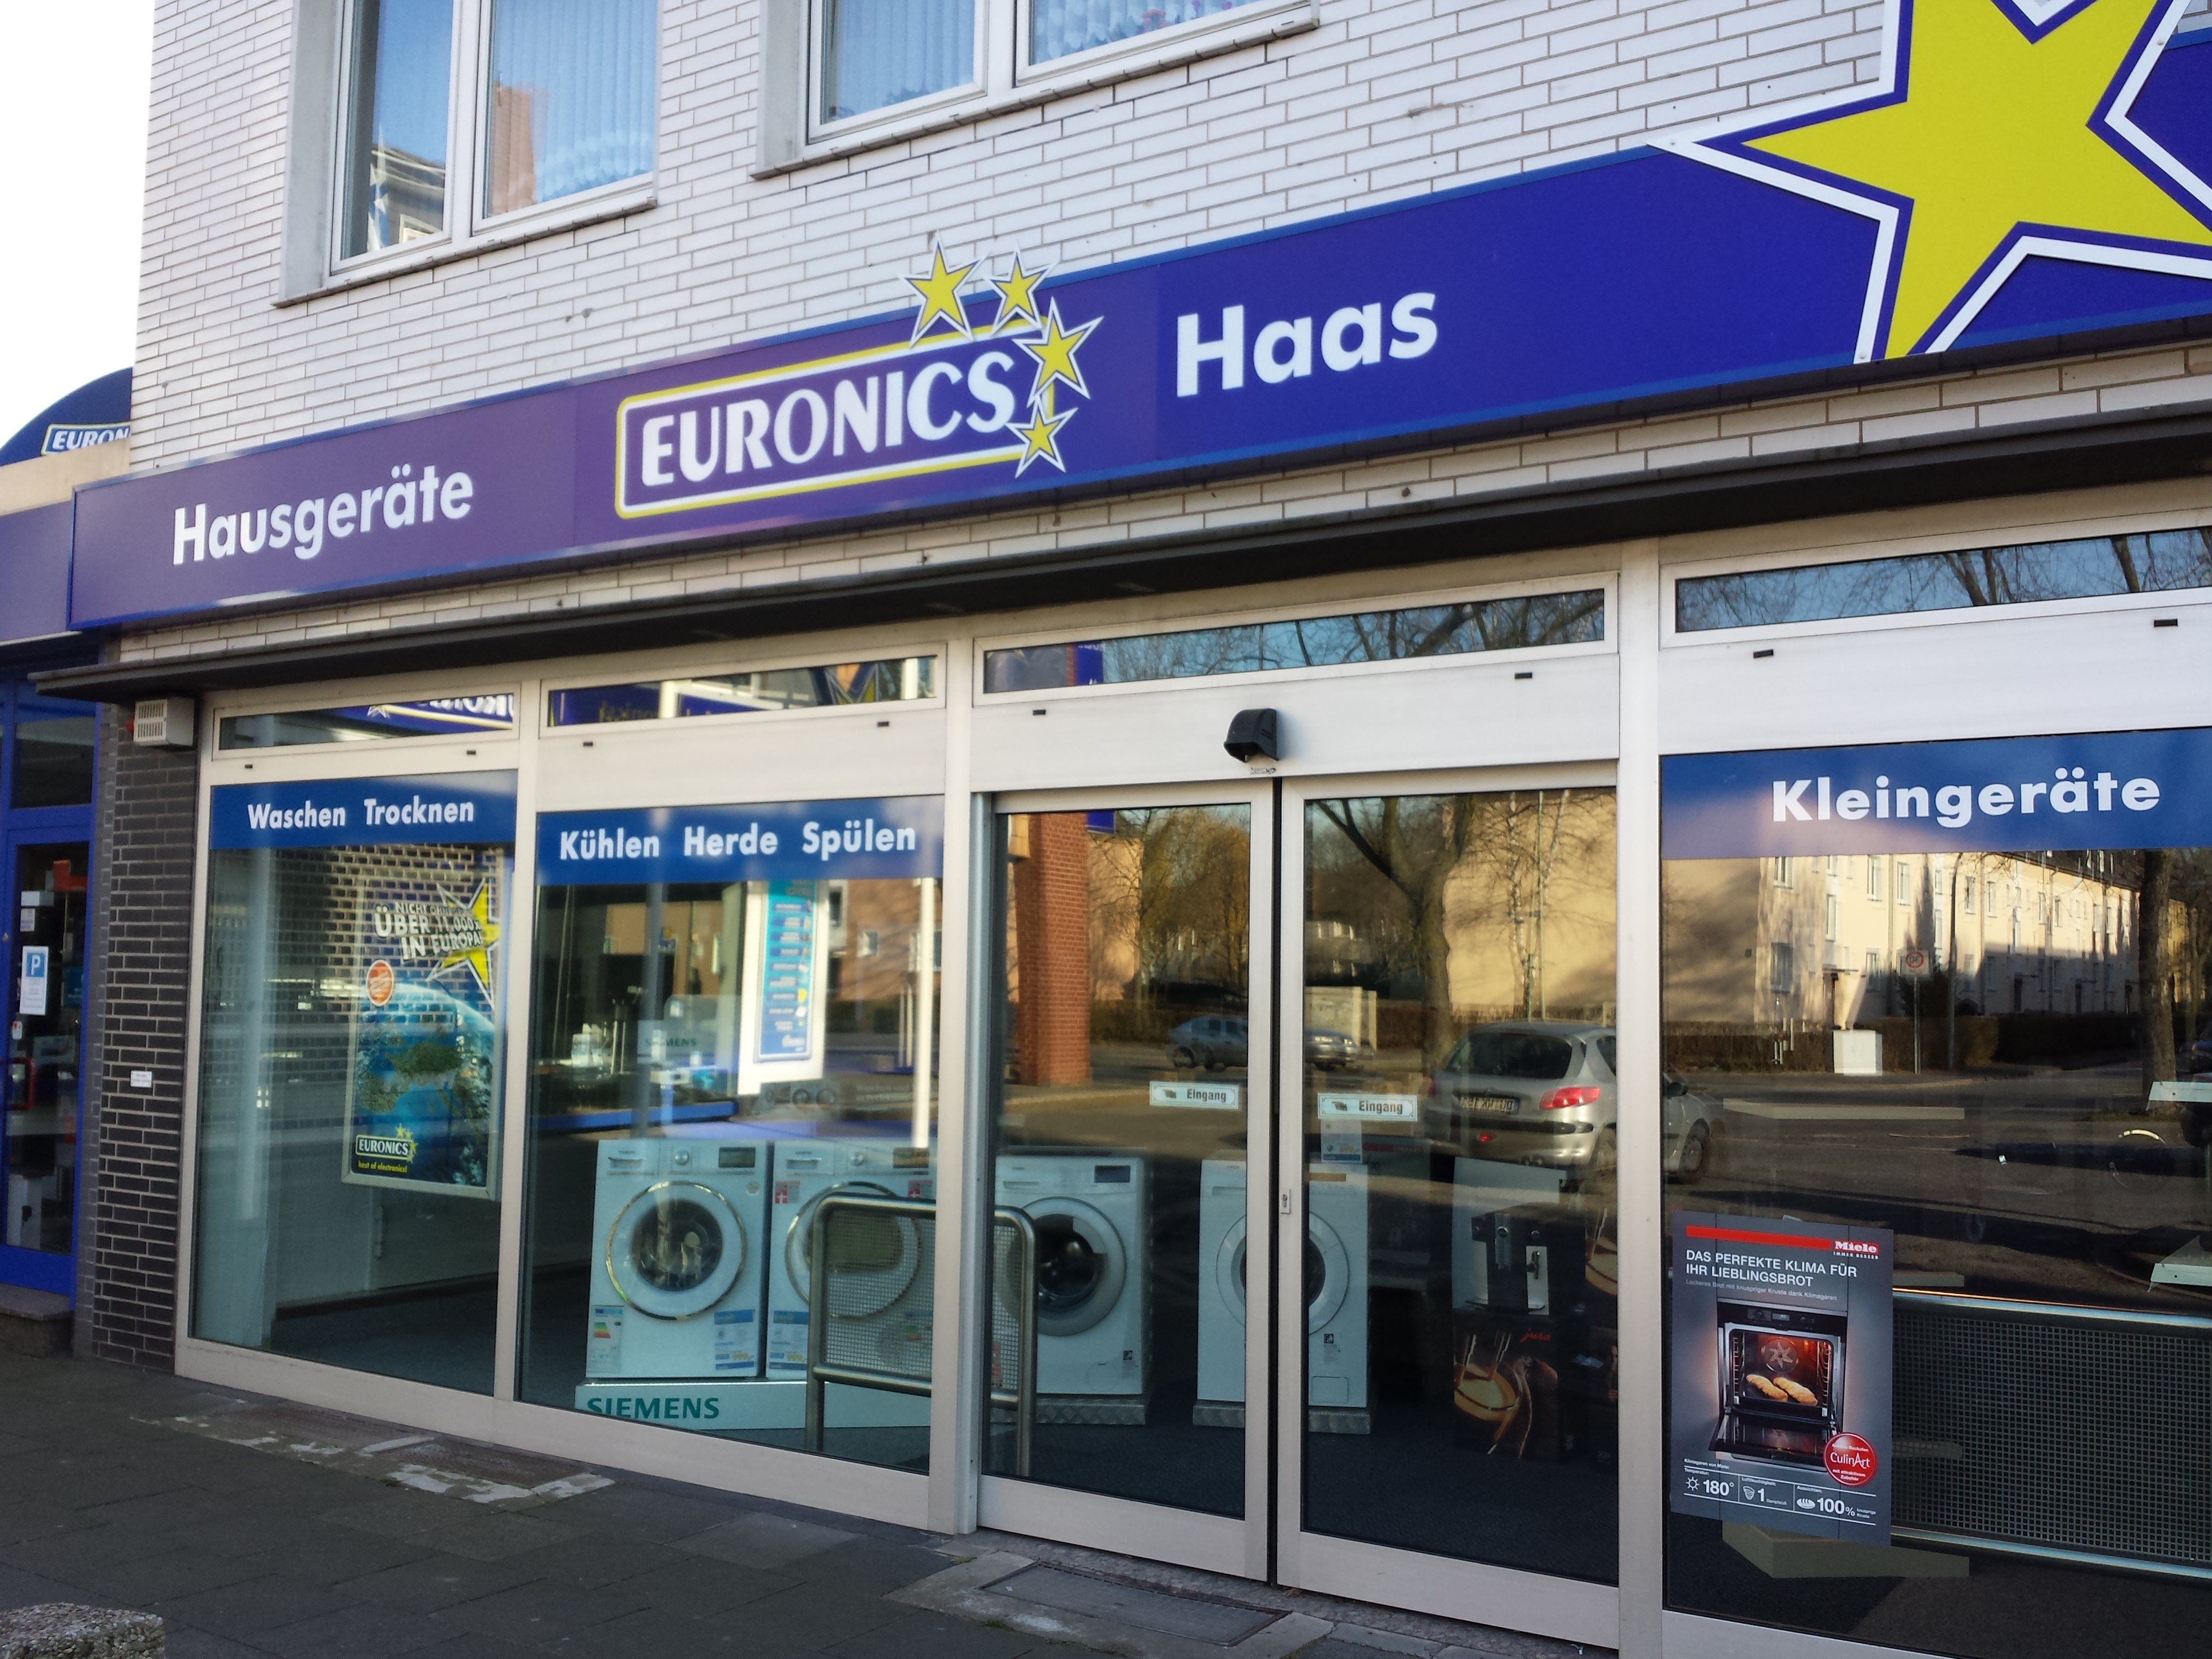 Bild 10 EURONICS Haas in Duisburg